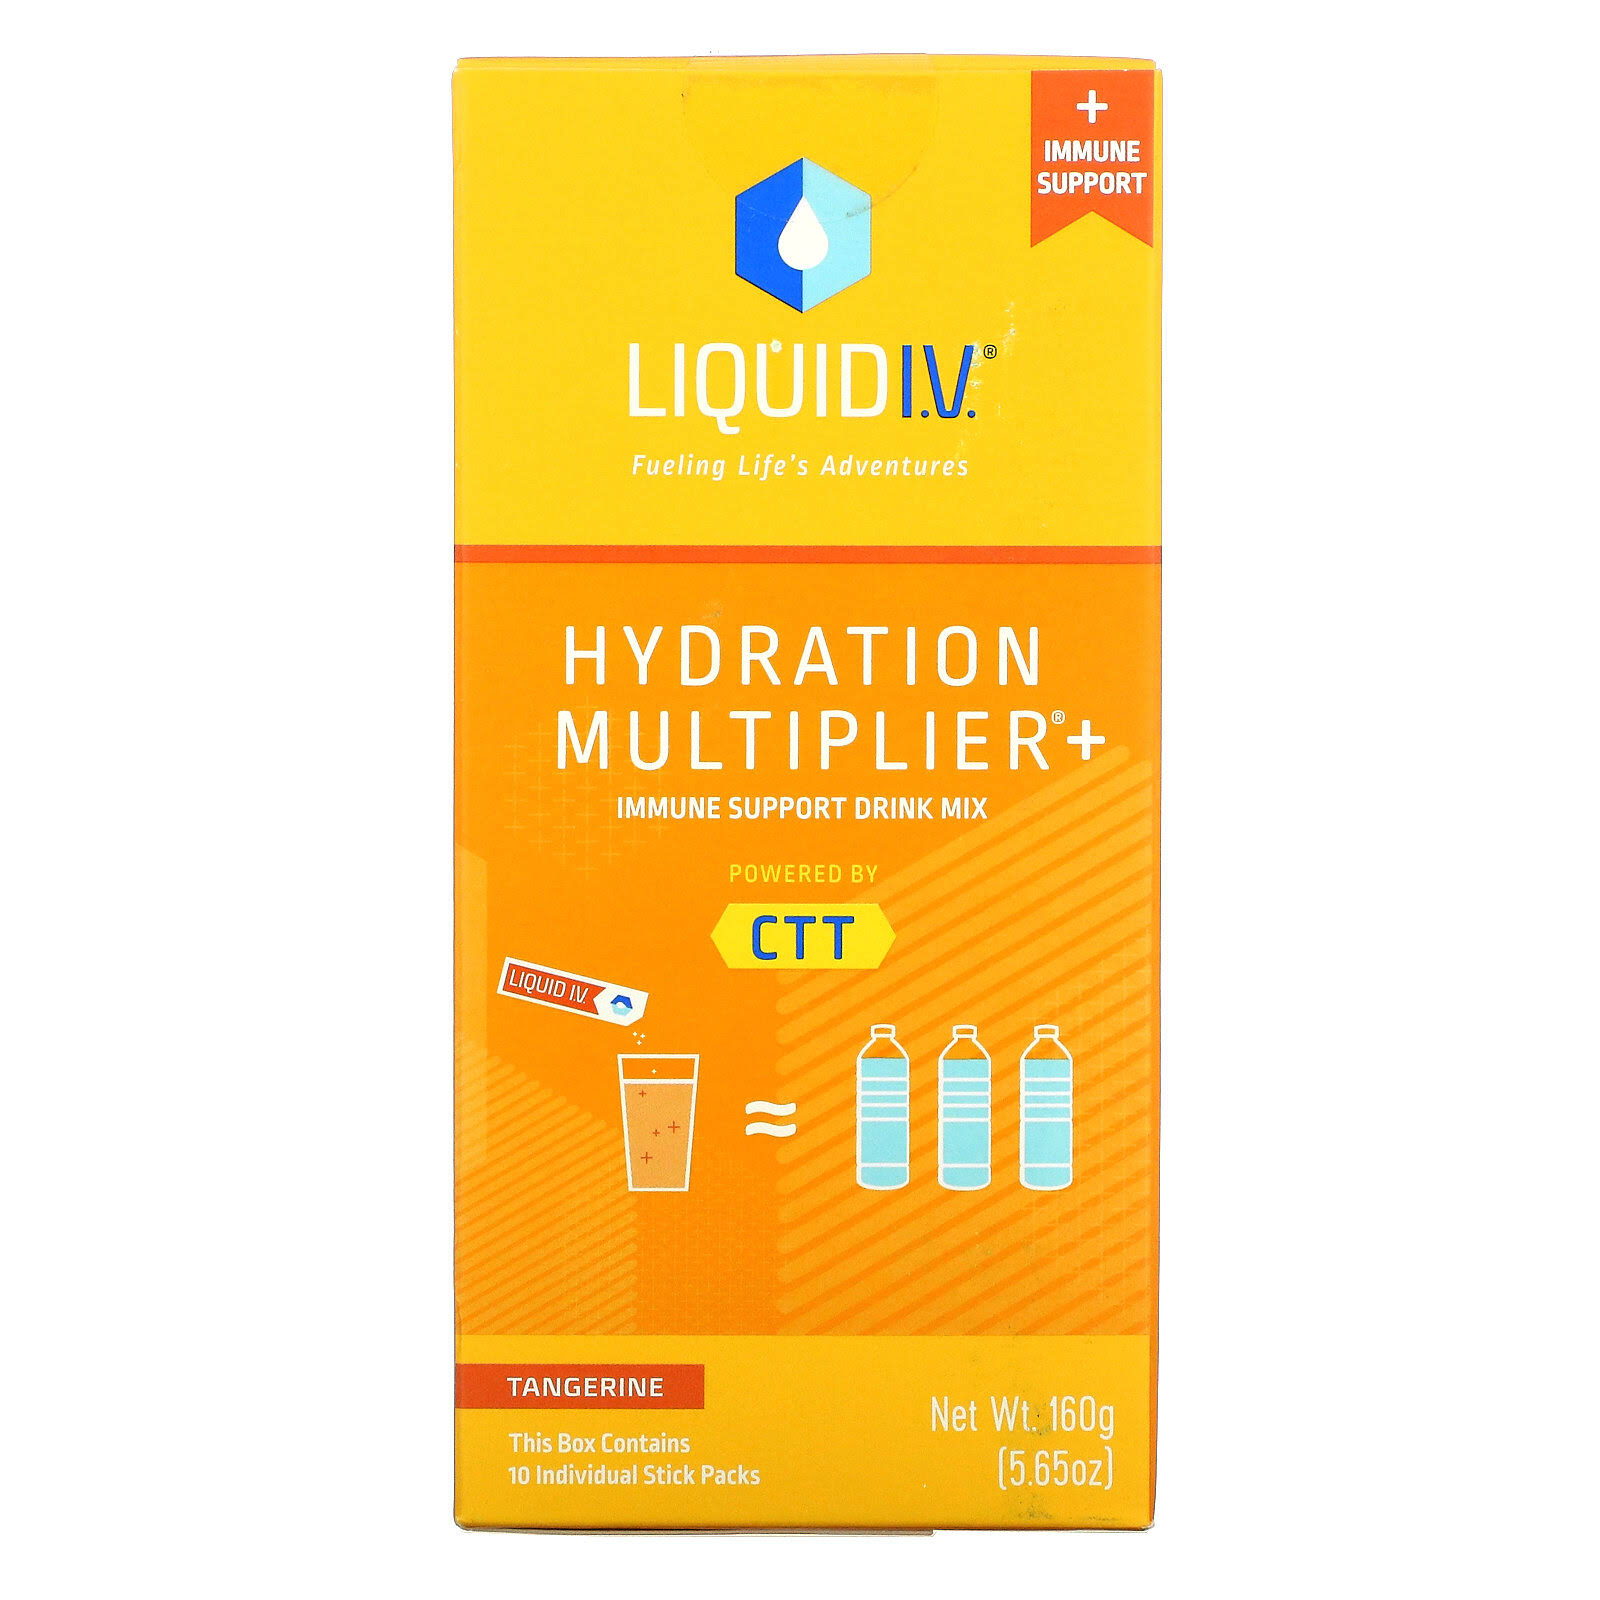 Hydration Plus Immune Support 5.65 oz by Liquid I.v